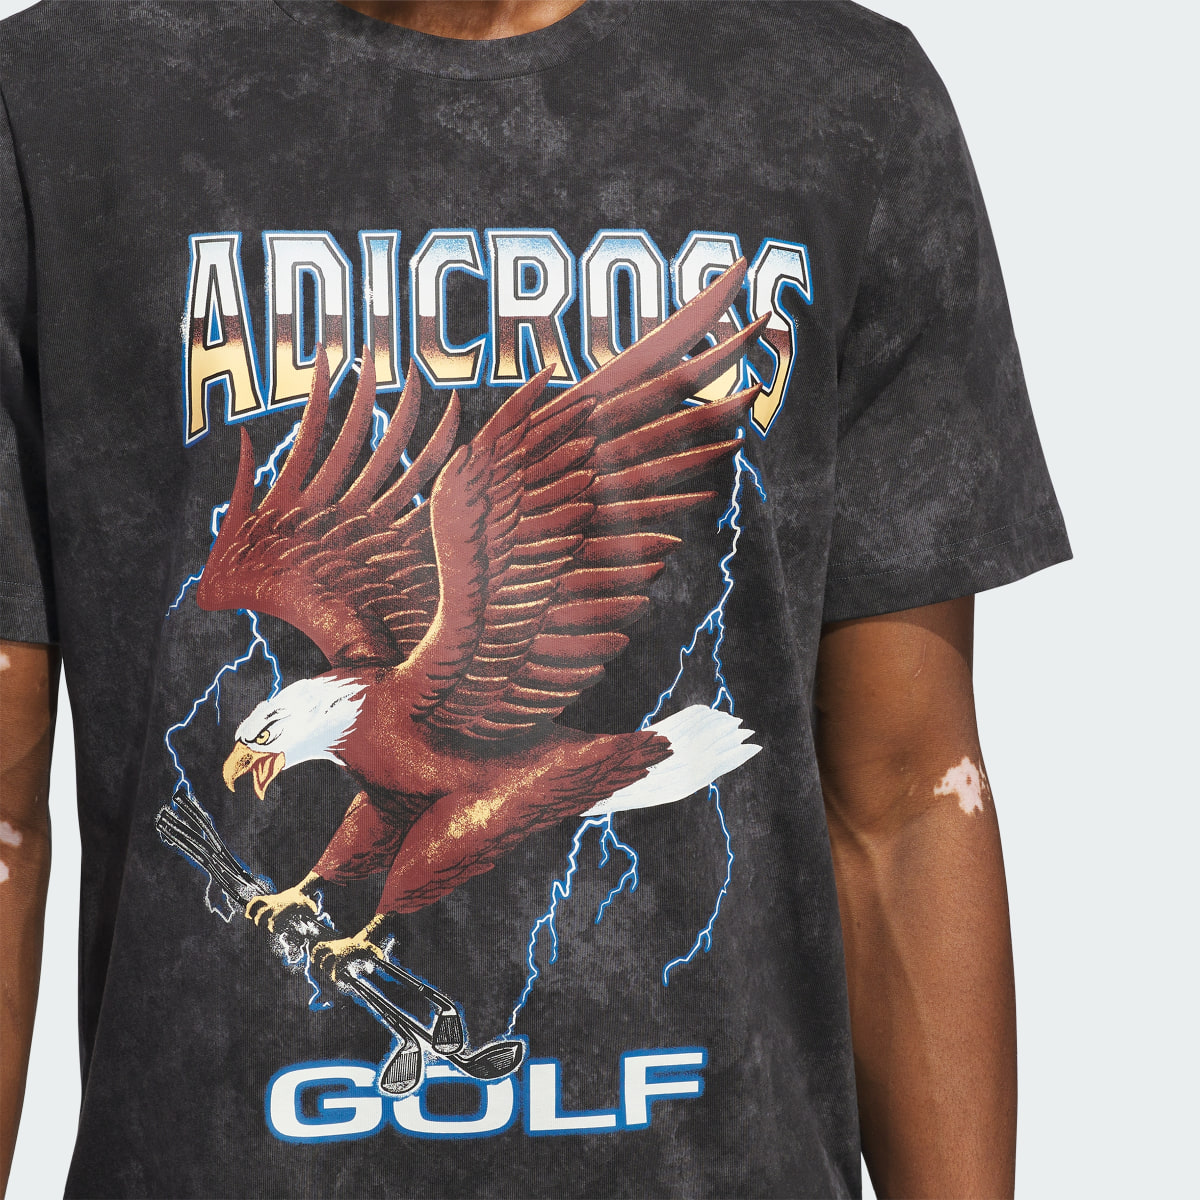 Adidas Adicross Eagle Graphic T-Shirt. 6